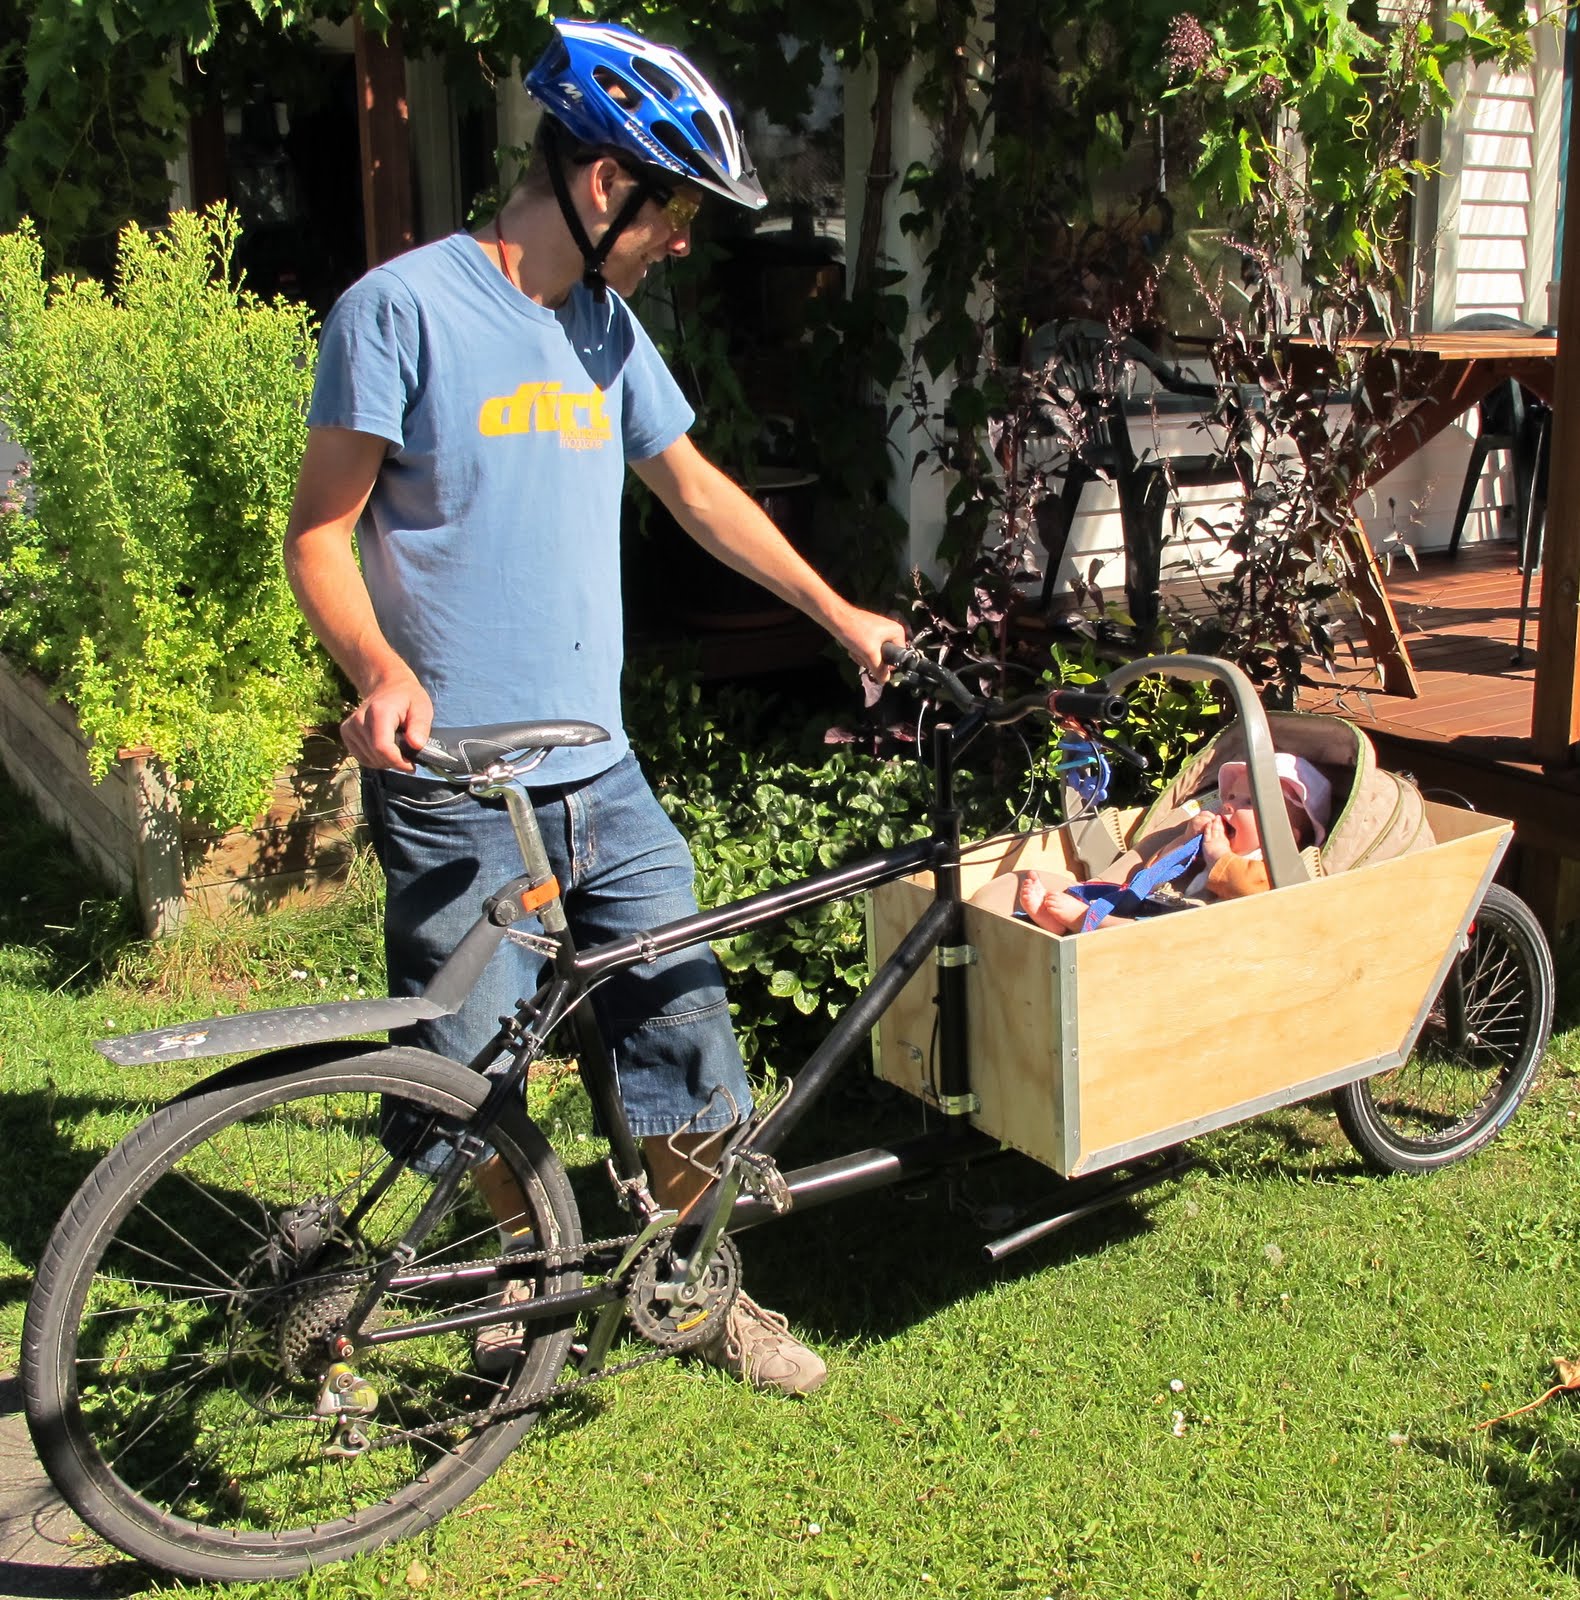 diepgaand Sympton proza Felix's Projects: The Homebuilt Bakfiets Cargo Bike